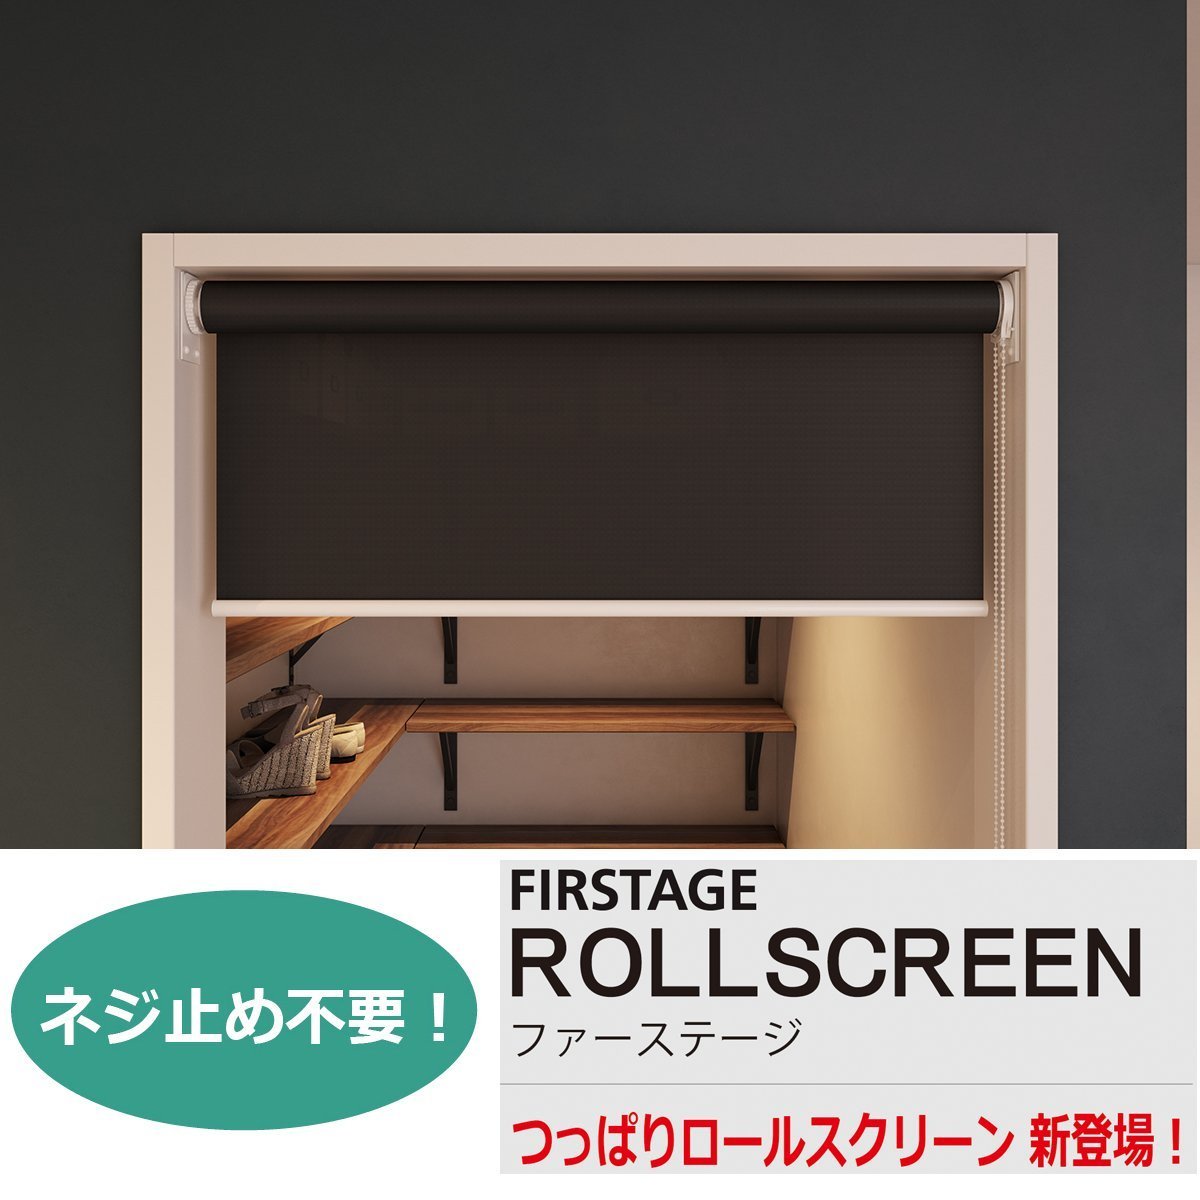 [.... roll screen ] заказ размер [ ширина 136~180cm× высота 91~180cm] Tachikawa здесь run рамка окна . стена . дыра . открытие .. установка возможность! инструмент не необходимо 